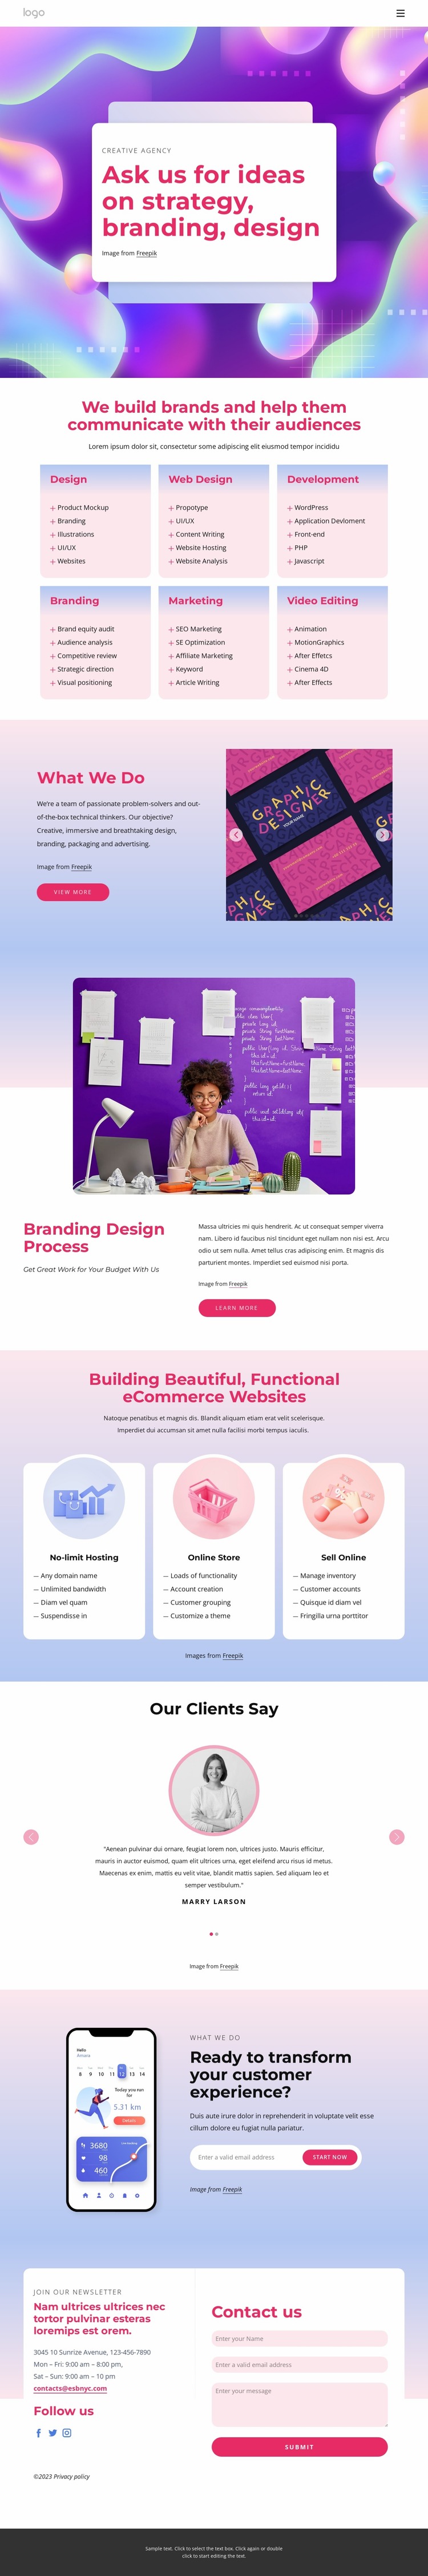 Branding, strategy and multidisciplinary design studio Website Mockup